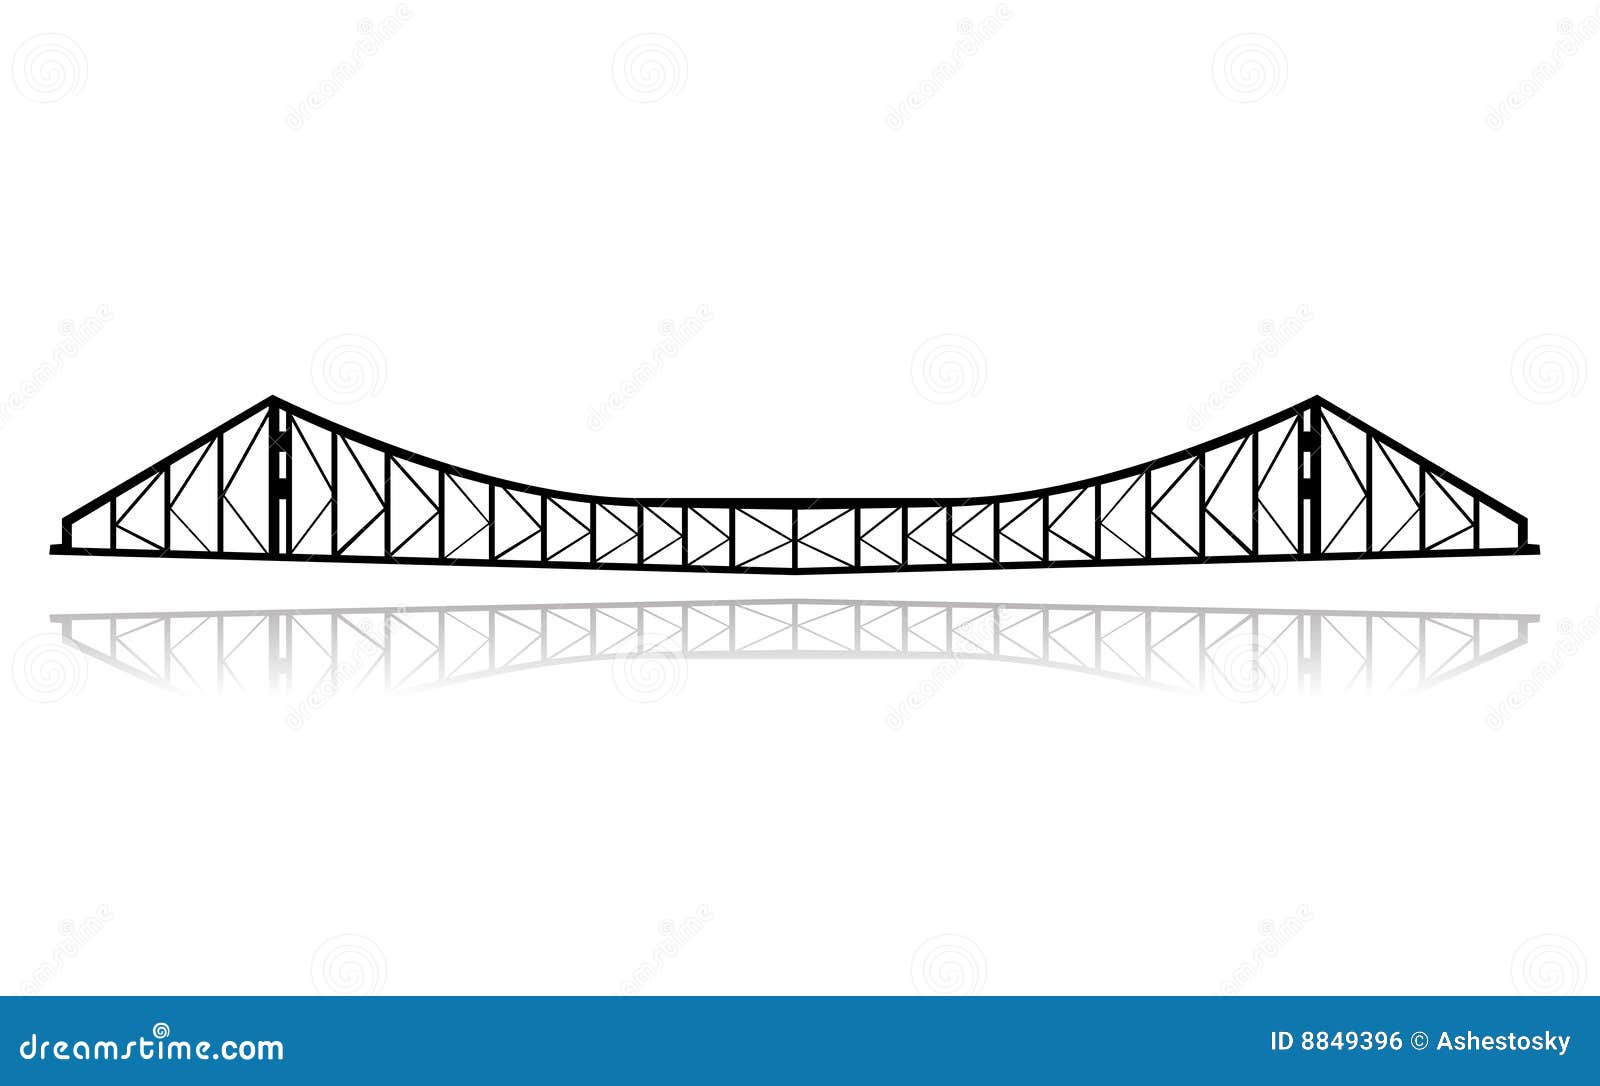 iron bridge clip art - photo #1